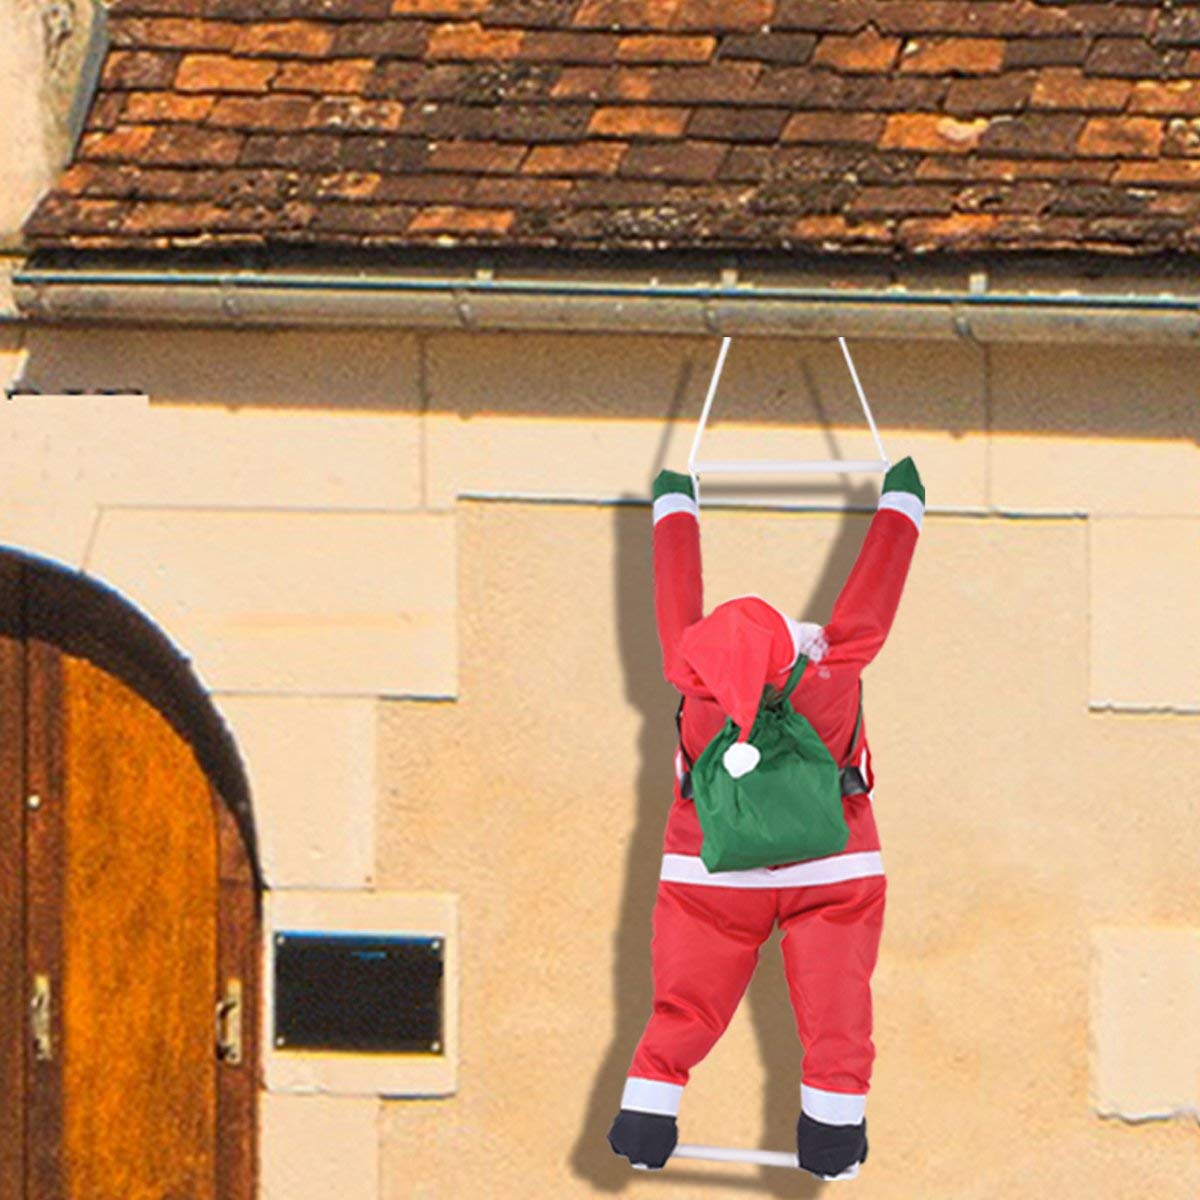 Climbing Hanging Santa Claus for Christmas Decoration